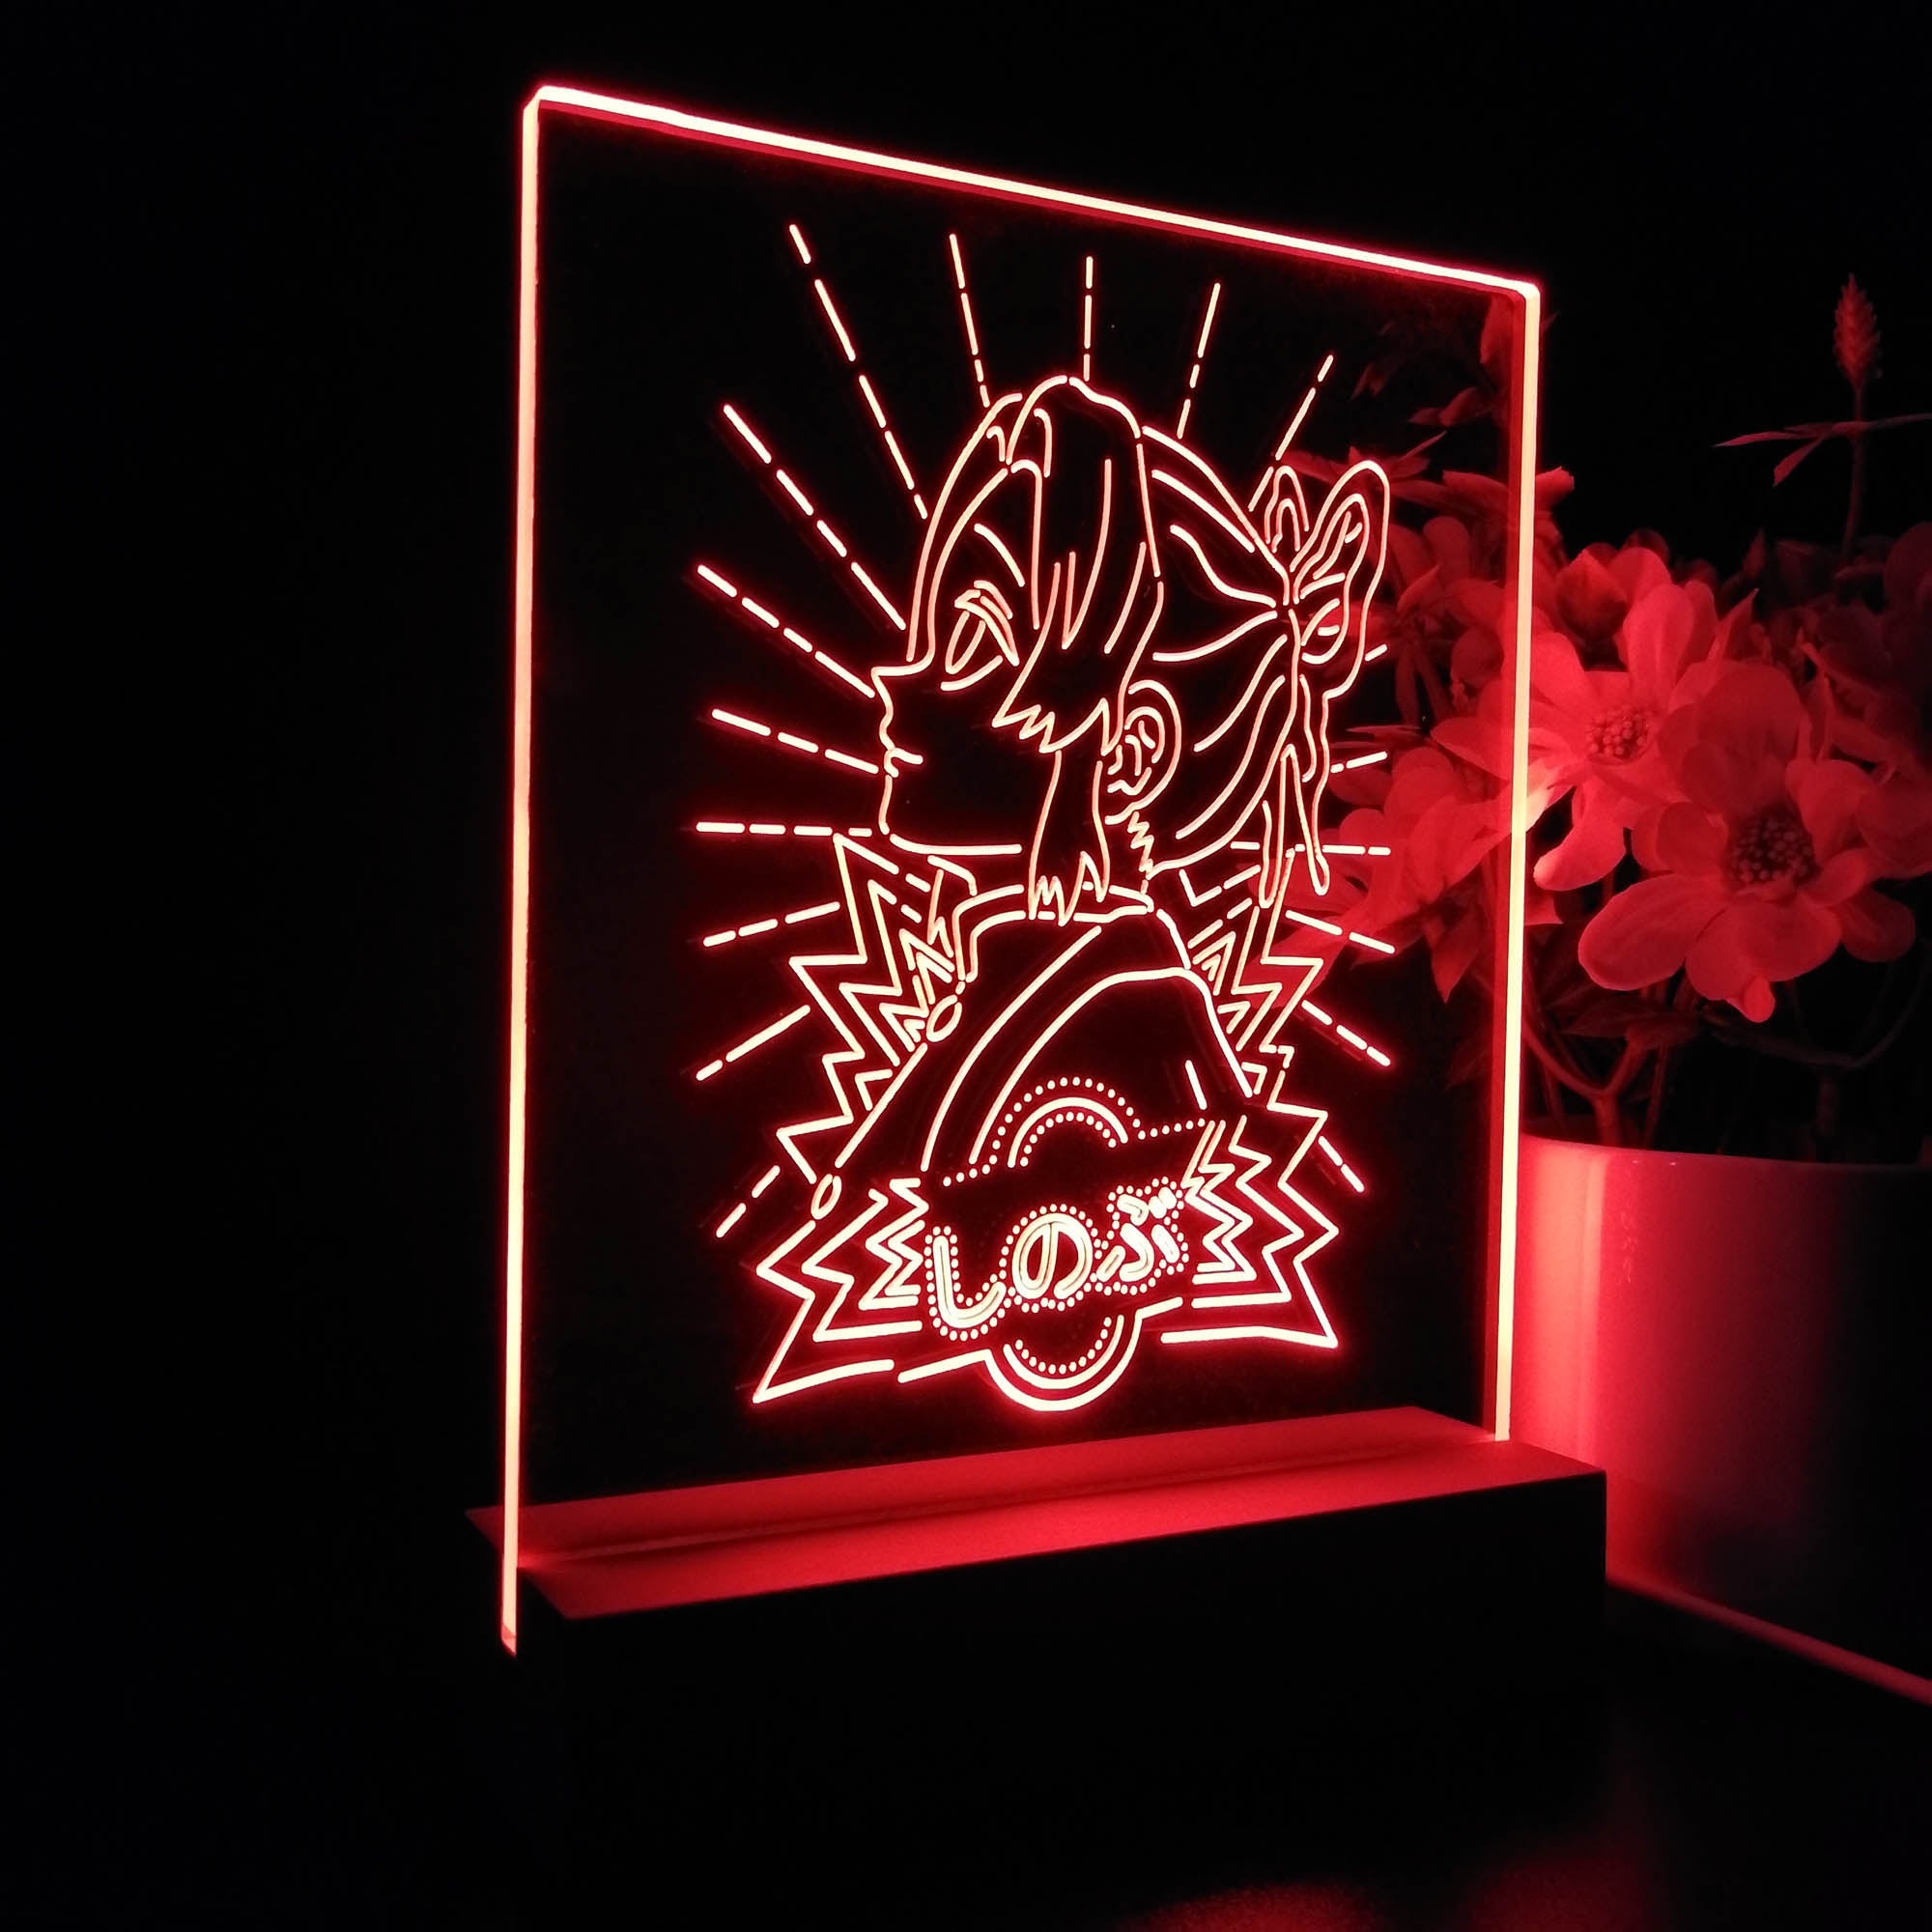 Demon Slayer Kochou Shinobu 3D LED Optical Illusion Sleep Night Light Table Lamp